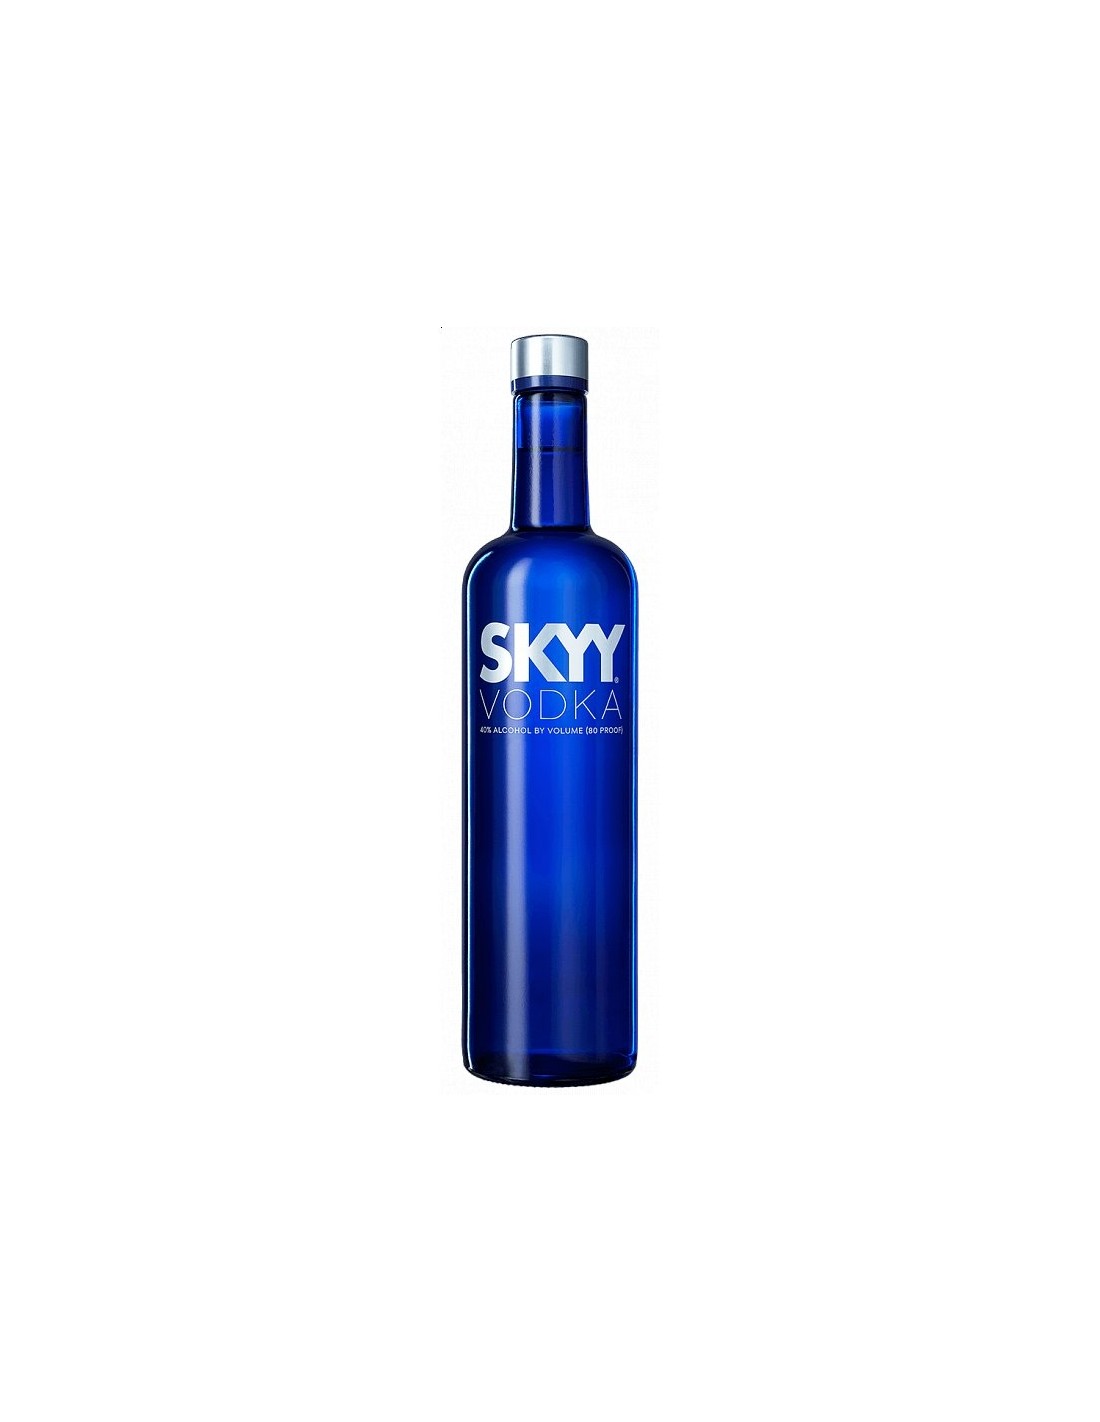 Vodca Skyy 3L, 40% alc., America alcooldiscount.ro